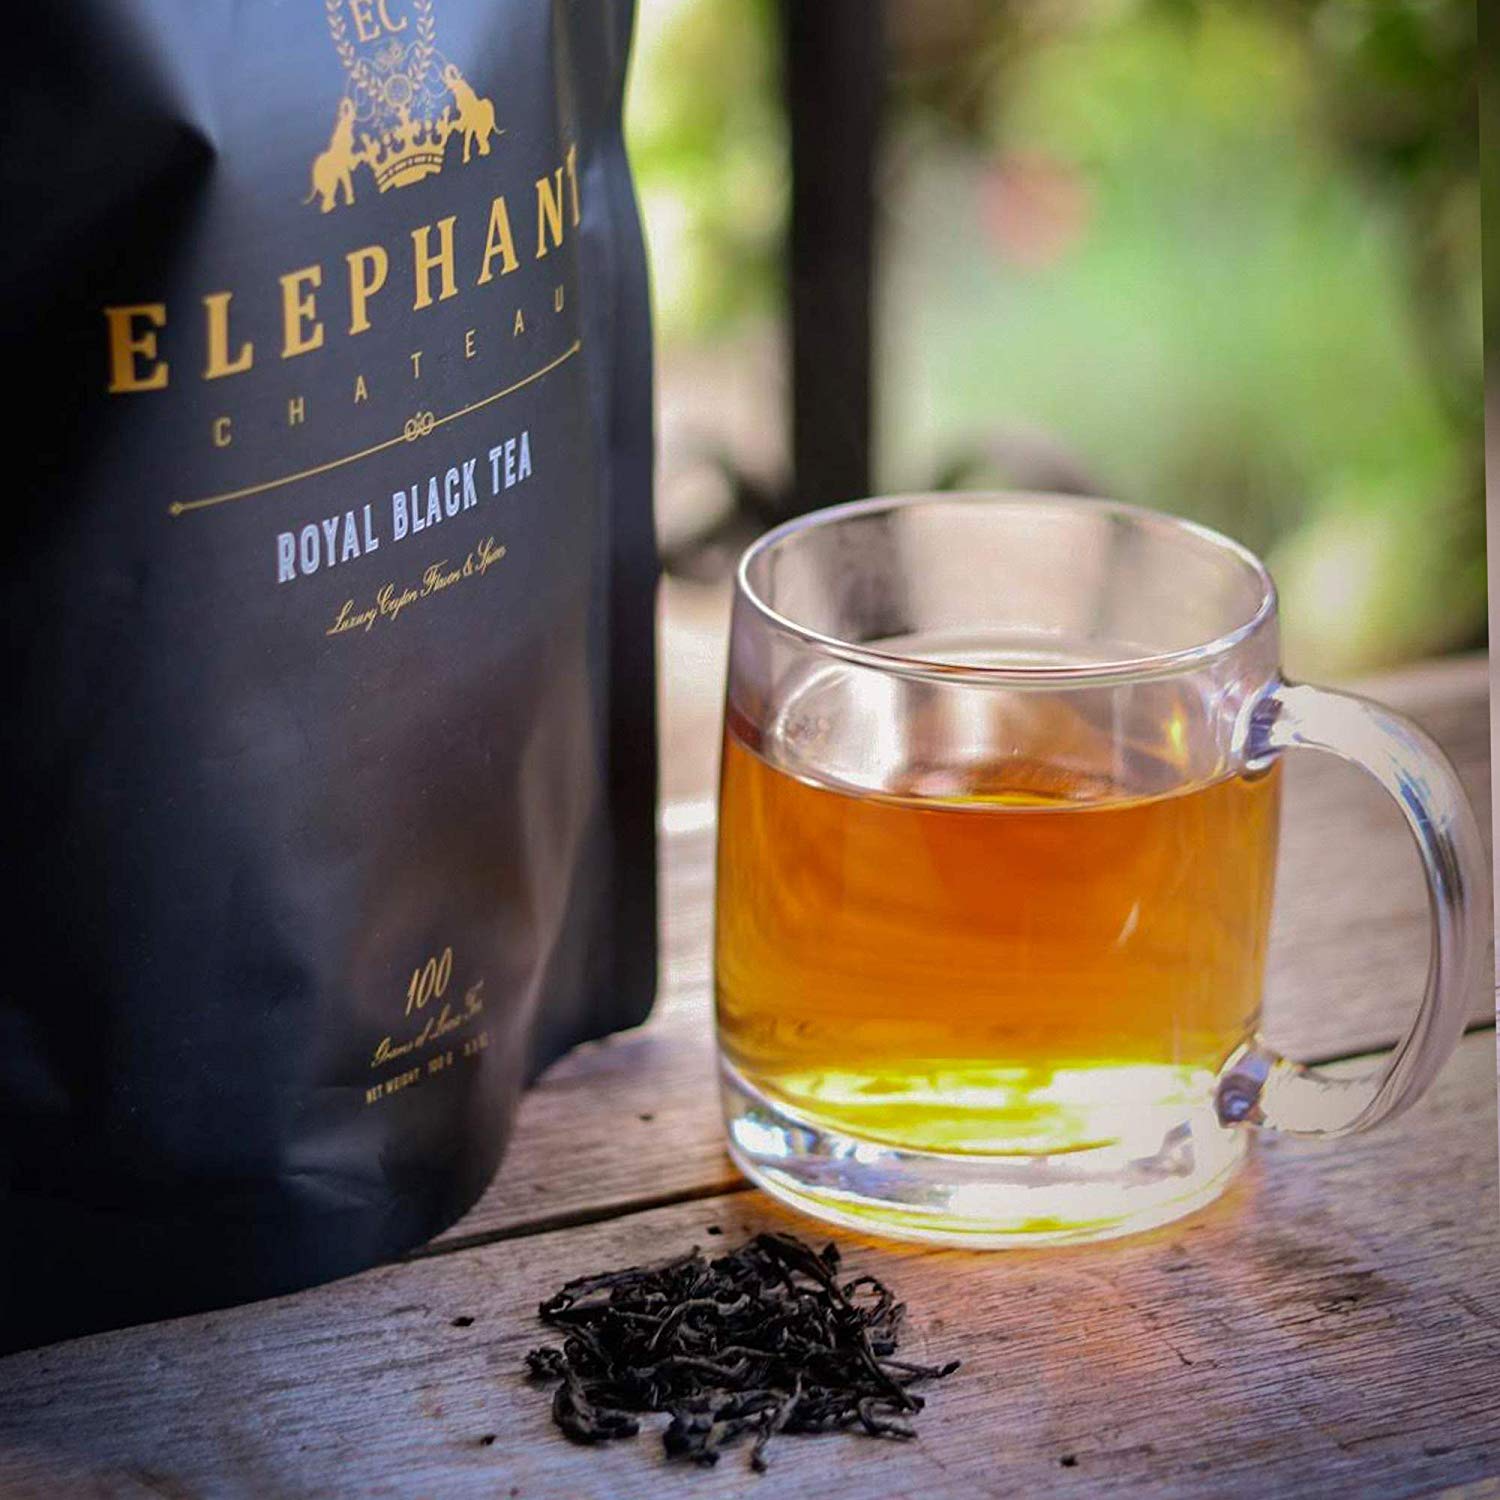 micro planer  Elephant Chateau - Premium Ceylon Tea, Vanilla